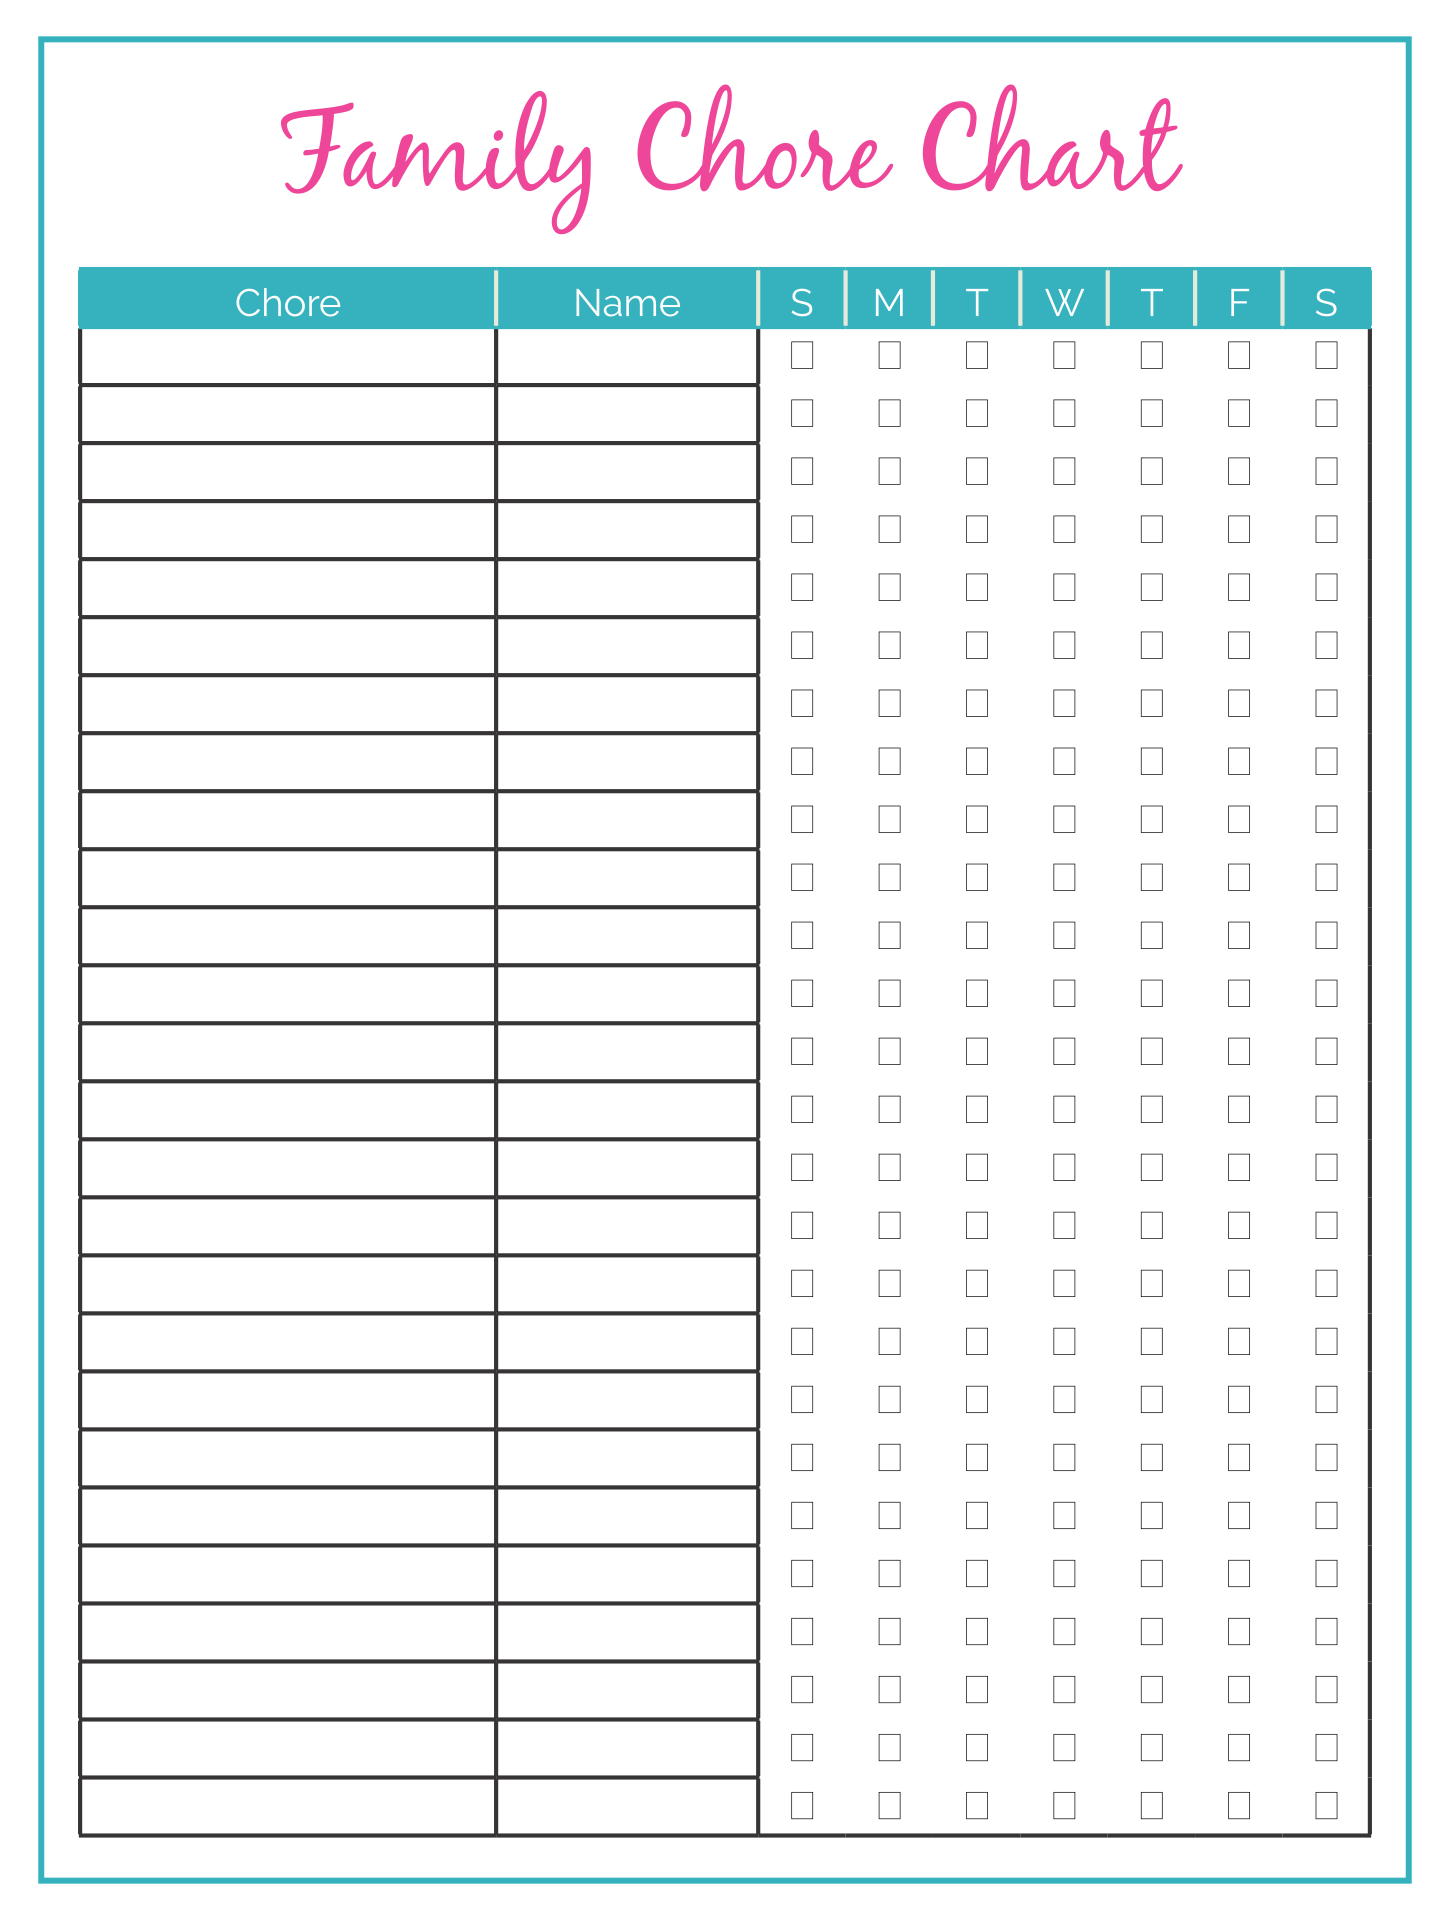 Family Chore Charts 10 Free PDF Printables Printablee